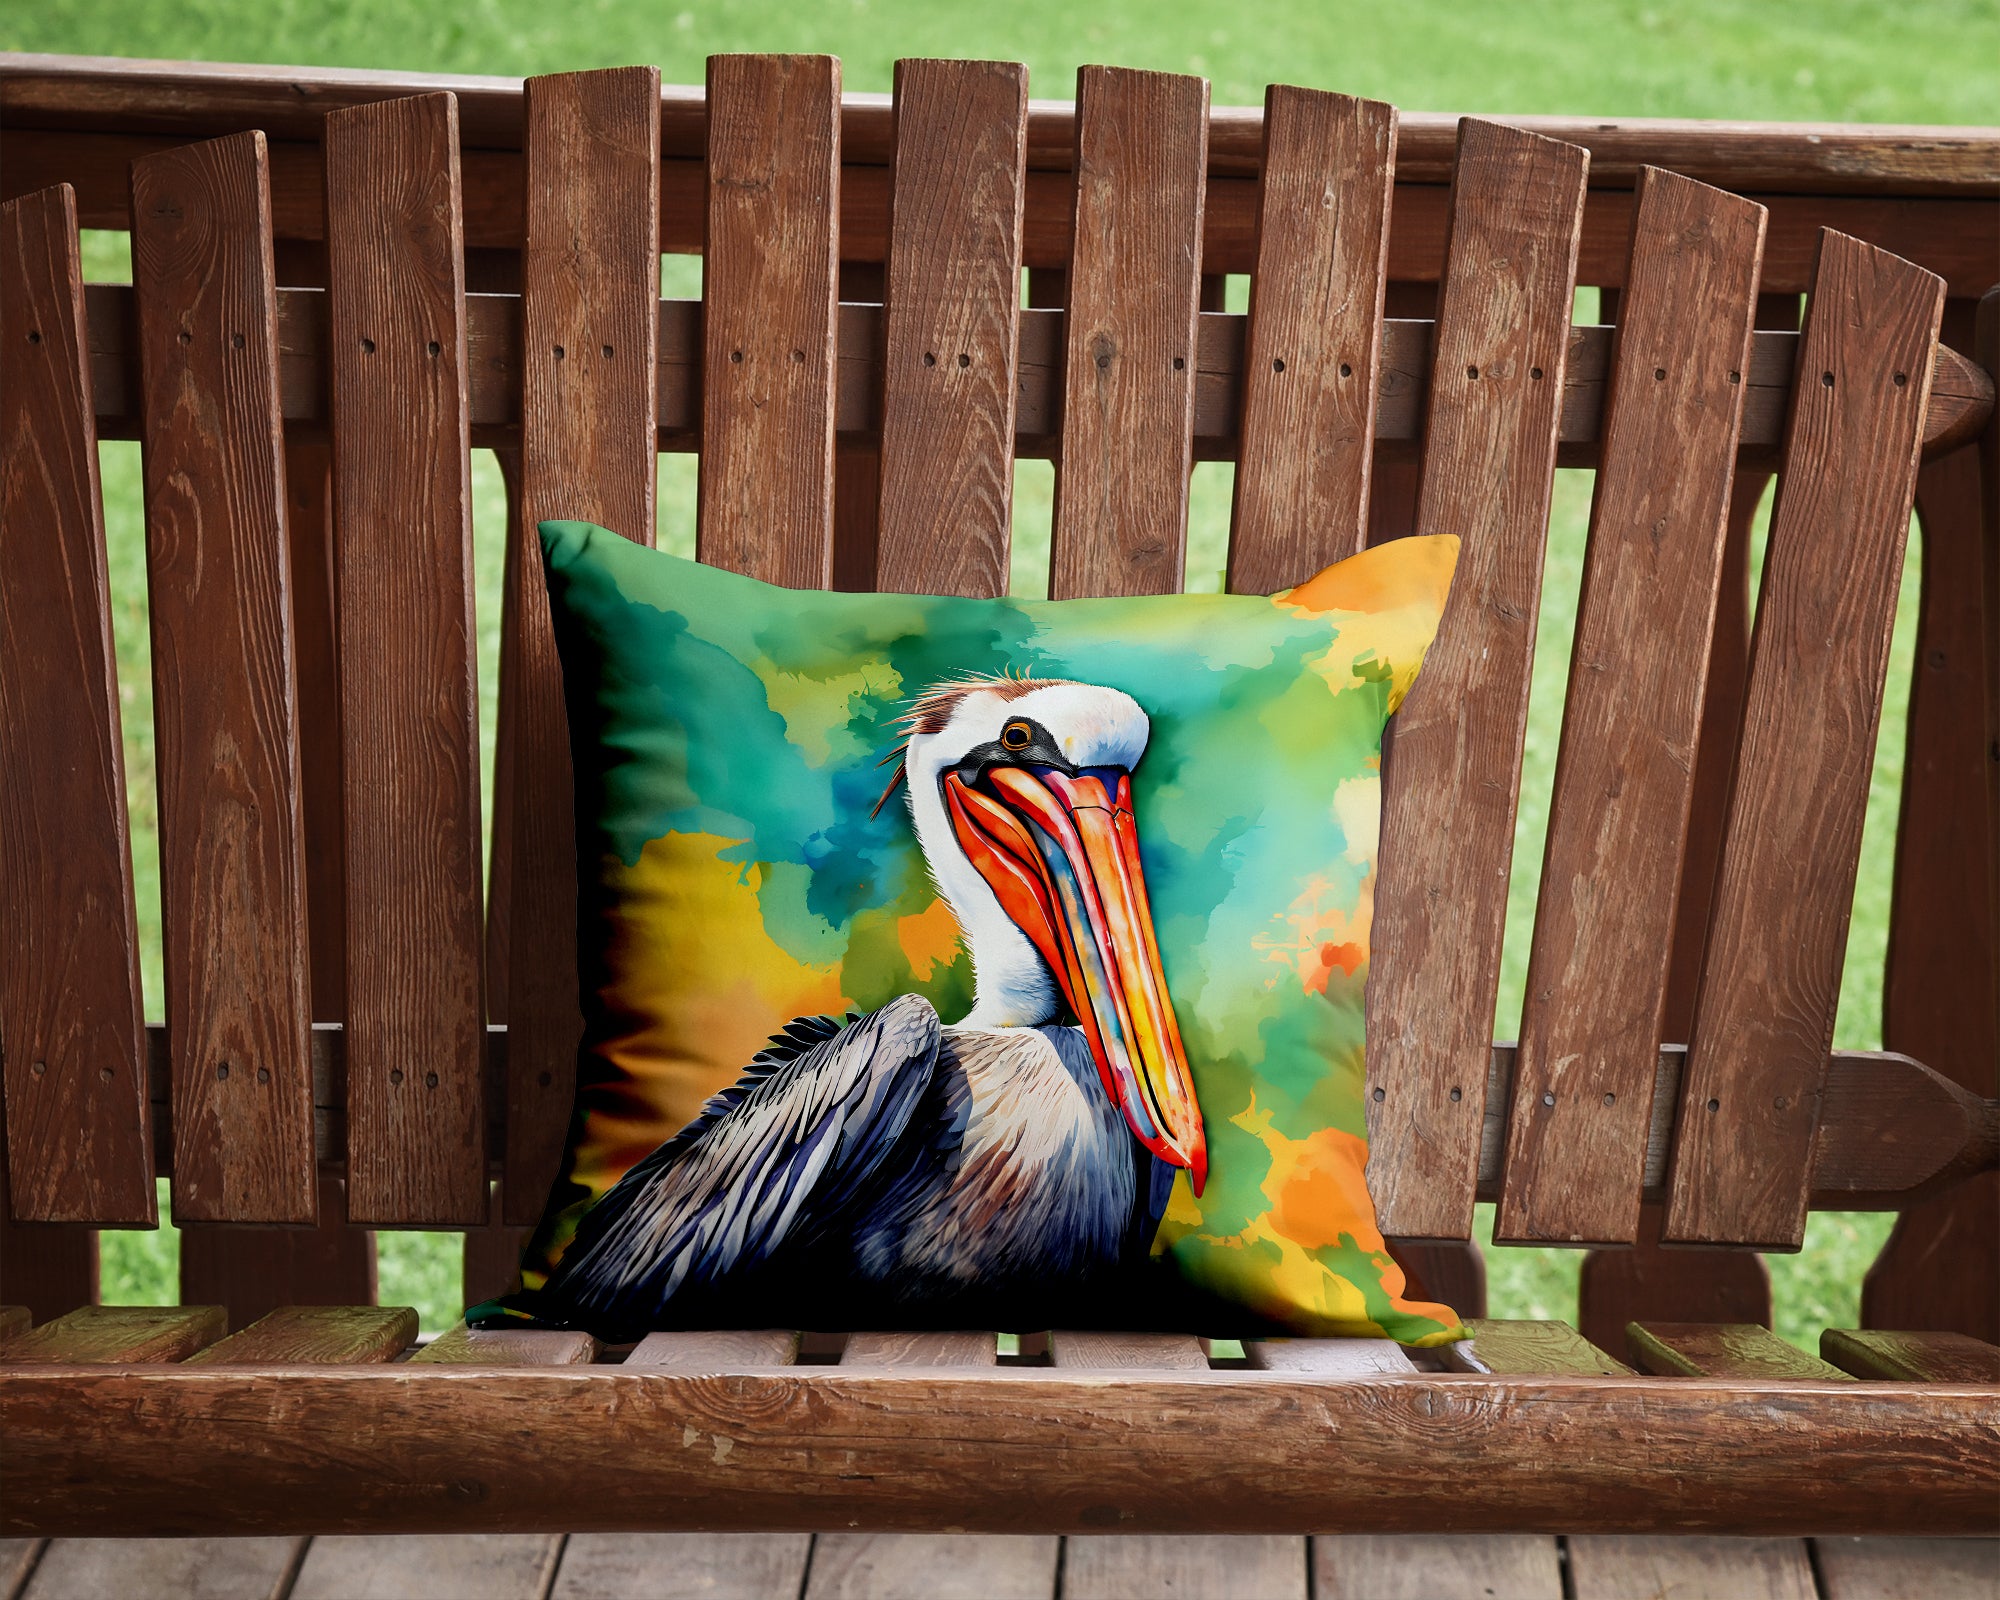 Buy this Hippie Animal Pelican Throw Pillow